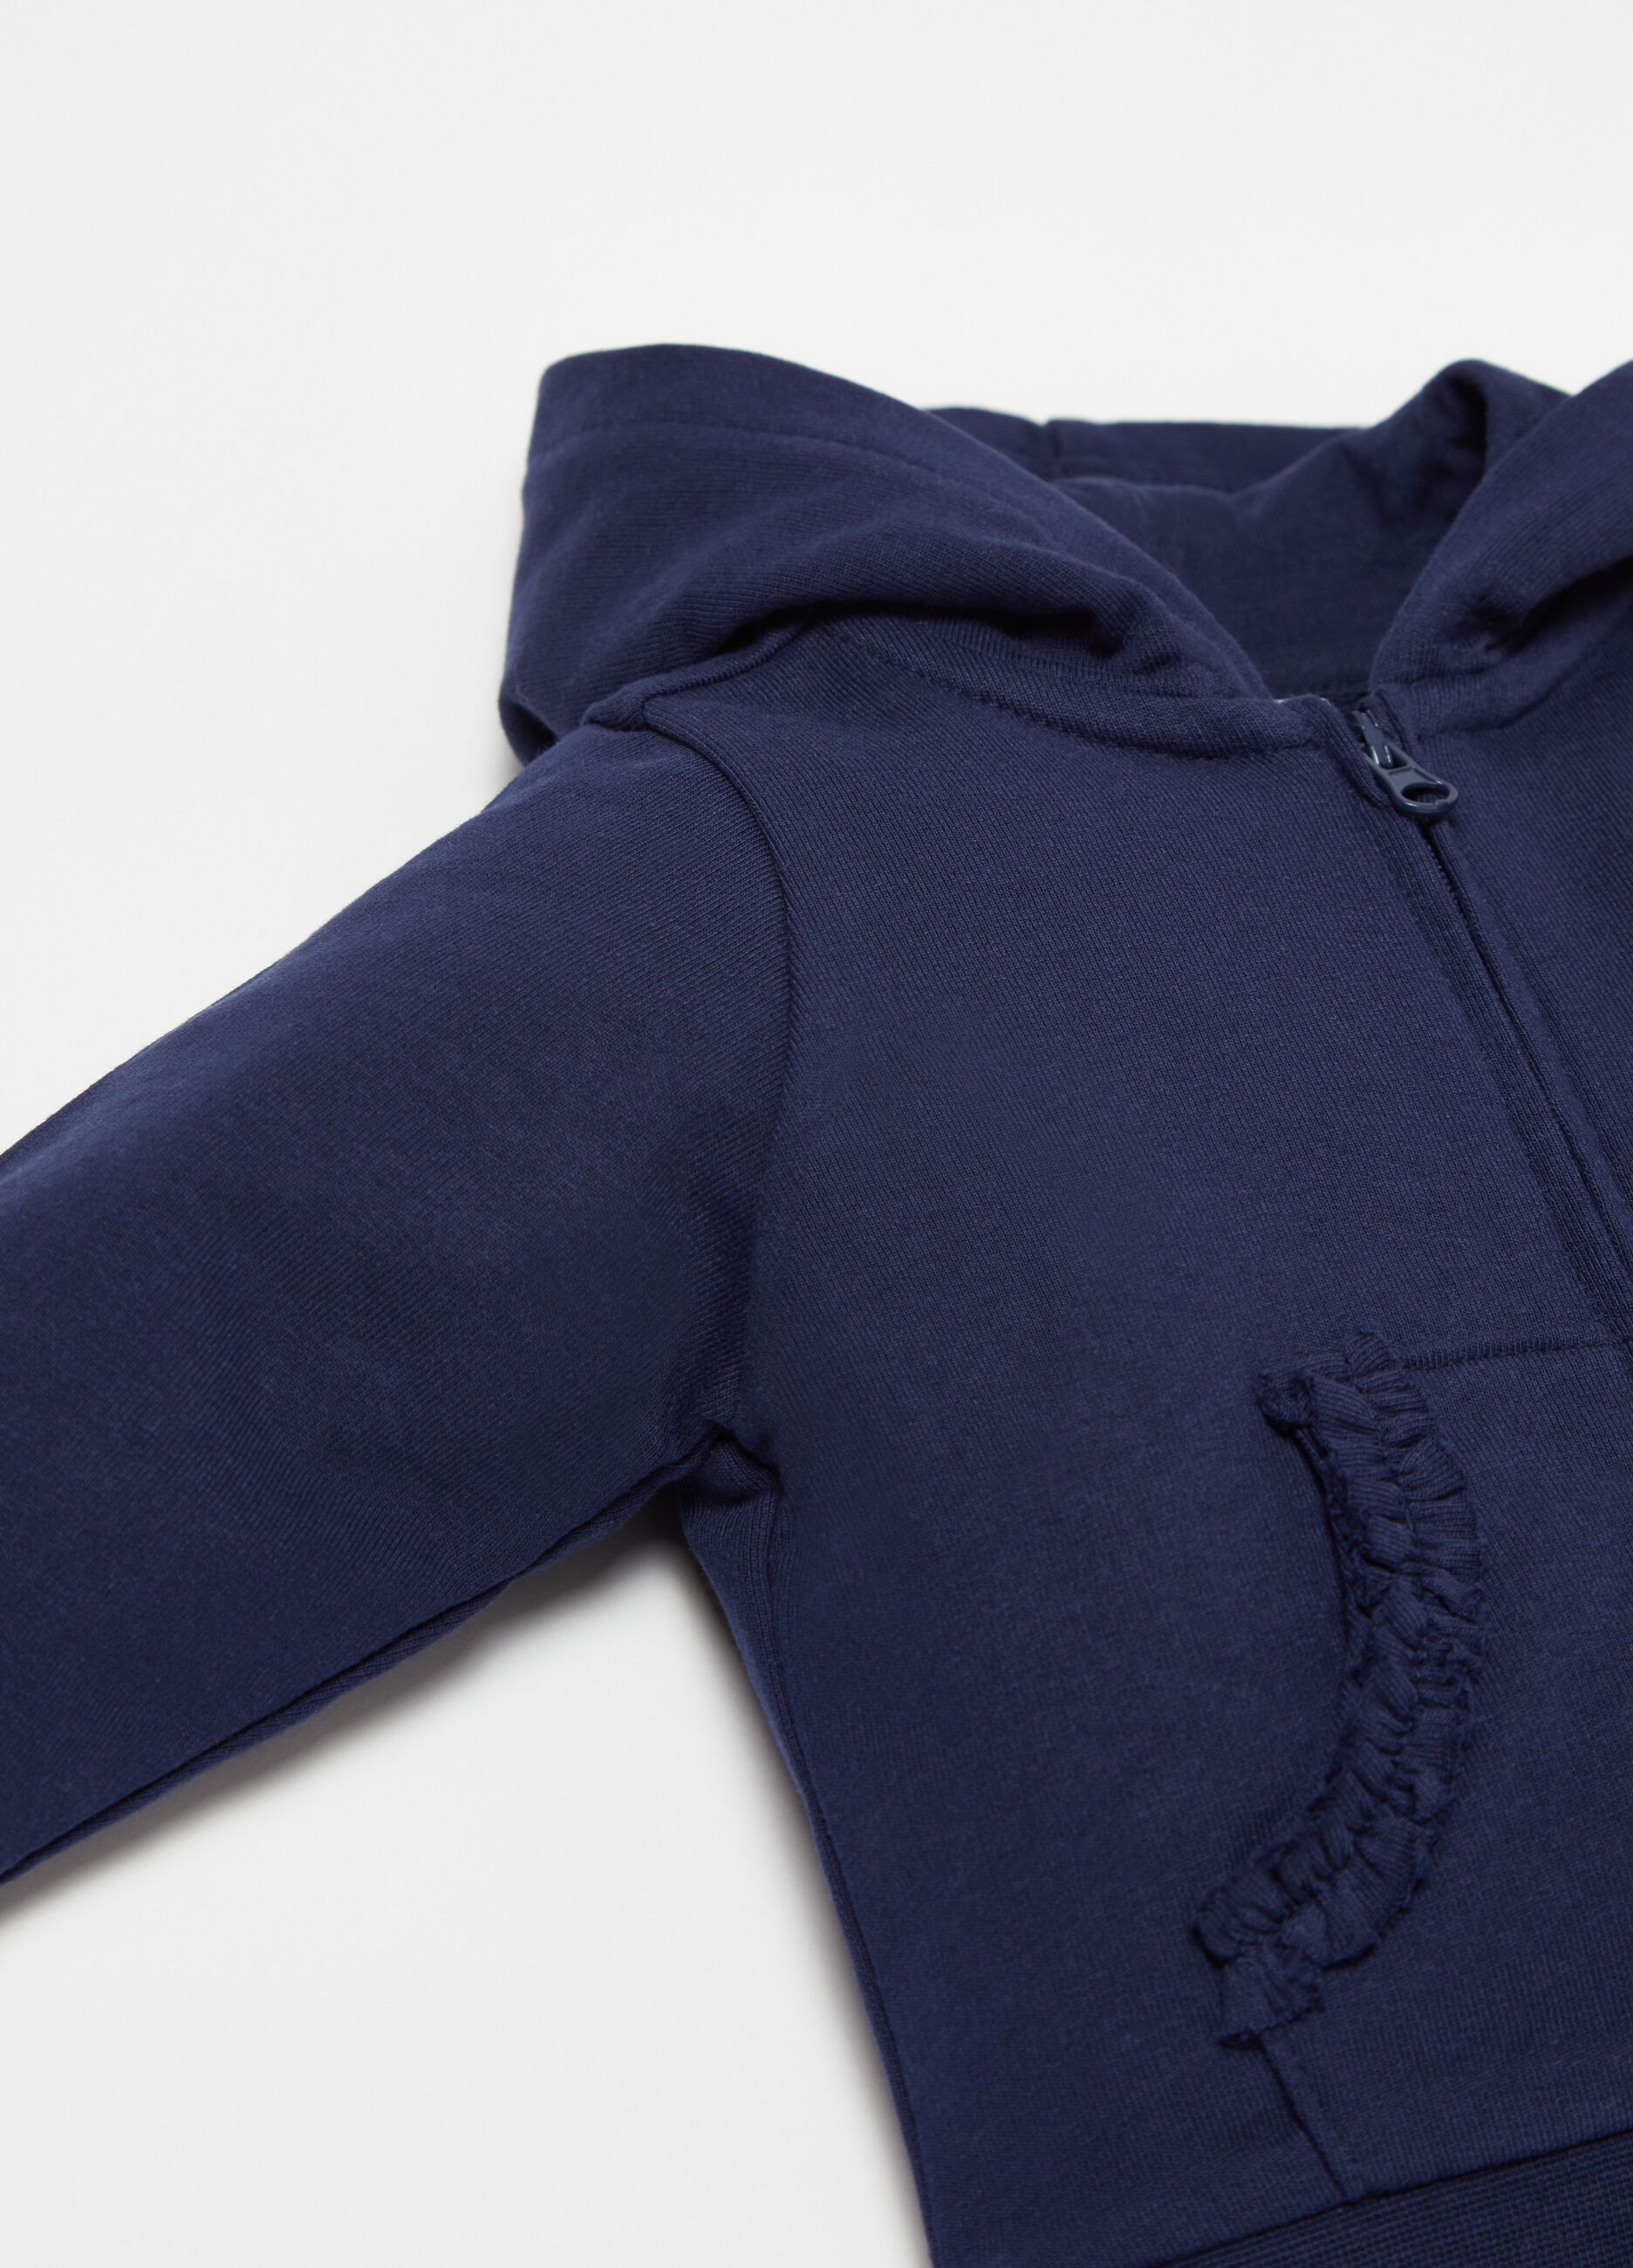 100% cotton full-zip sweatshirt with hood